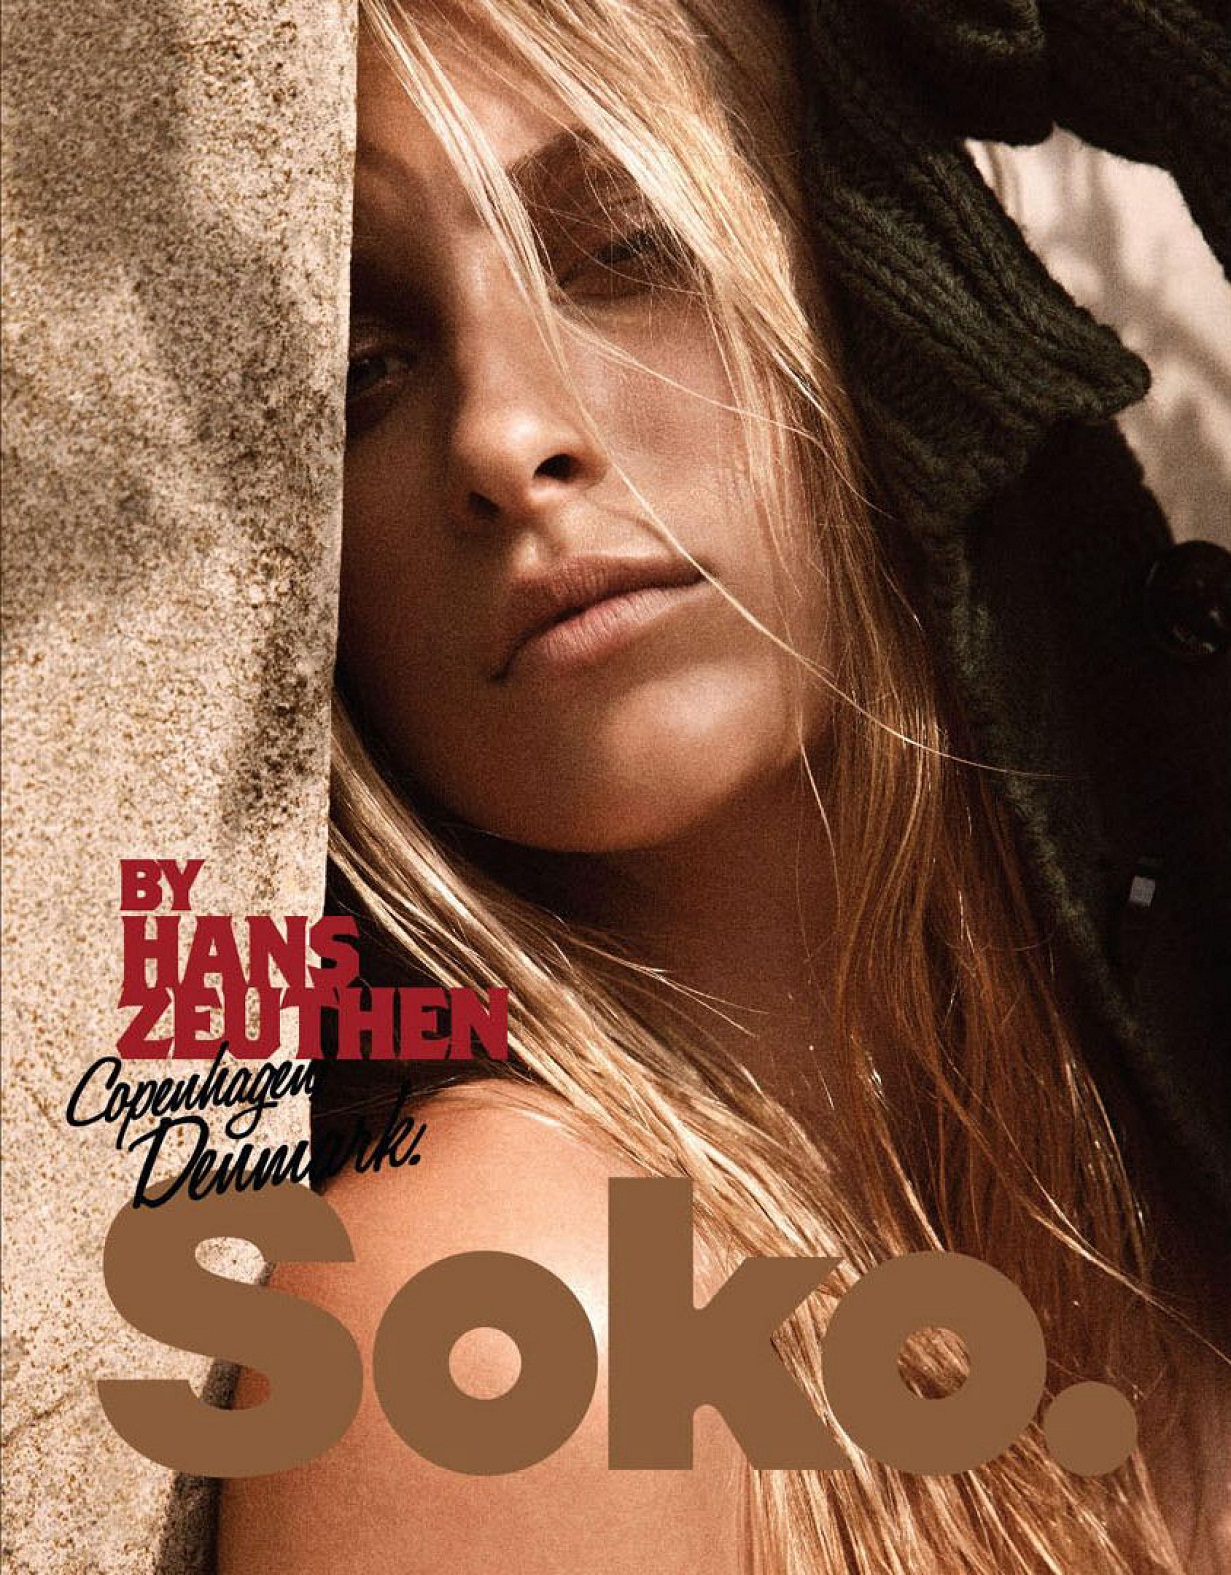 Rose topless in Soko Magazine